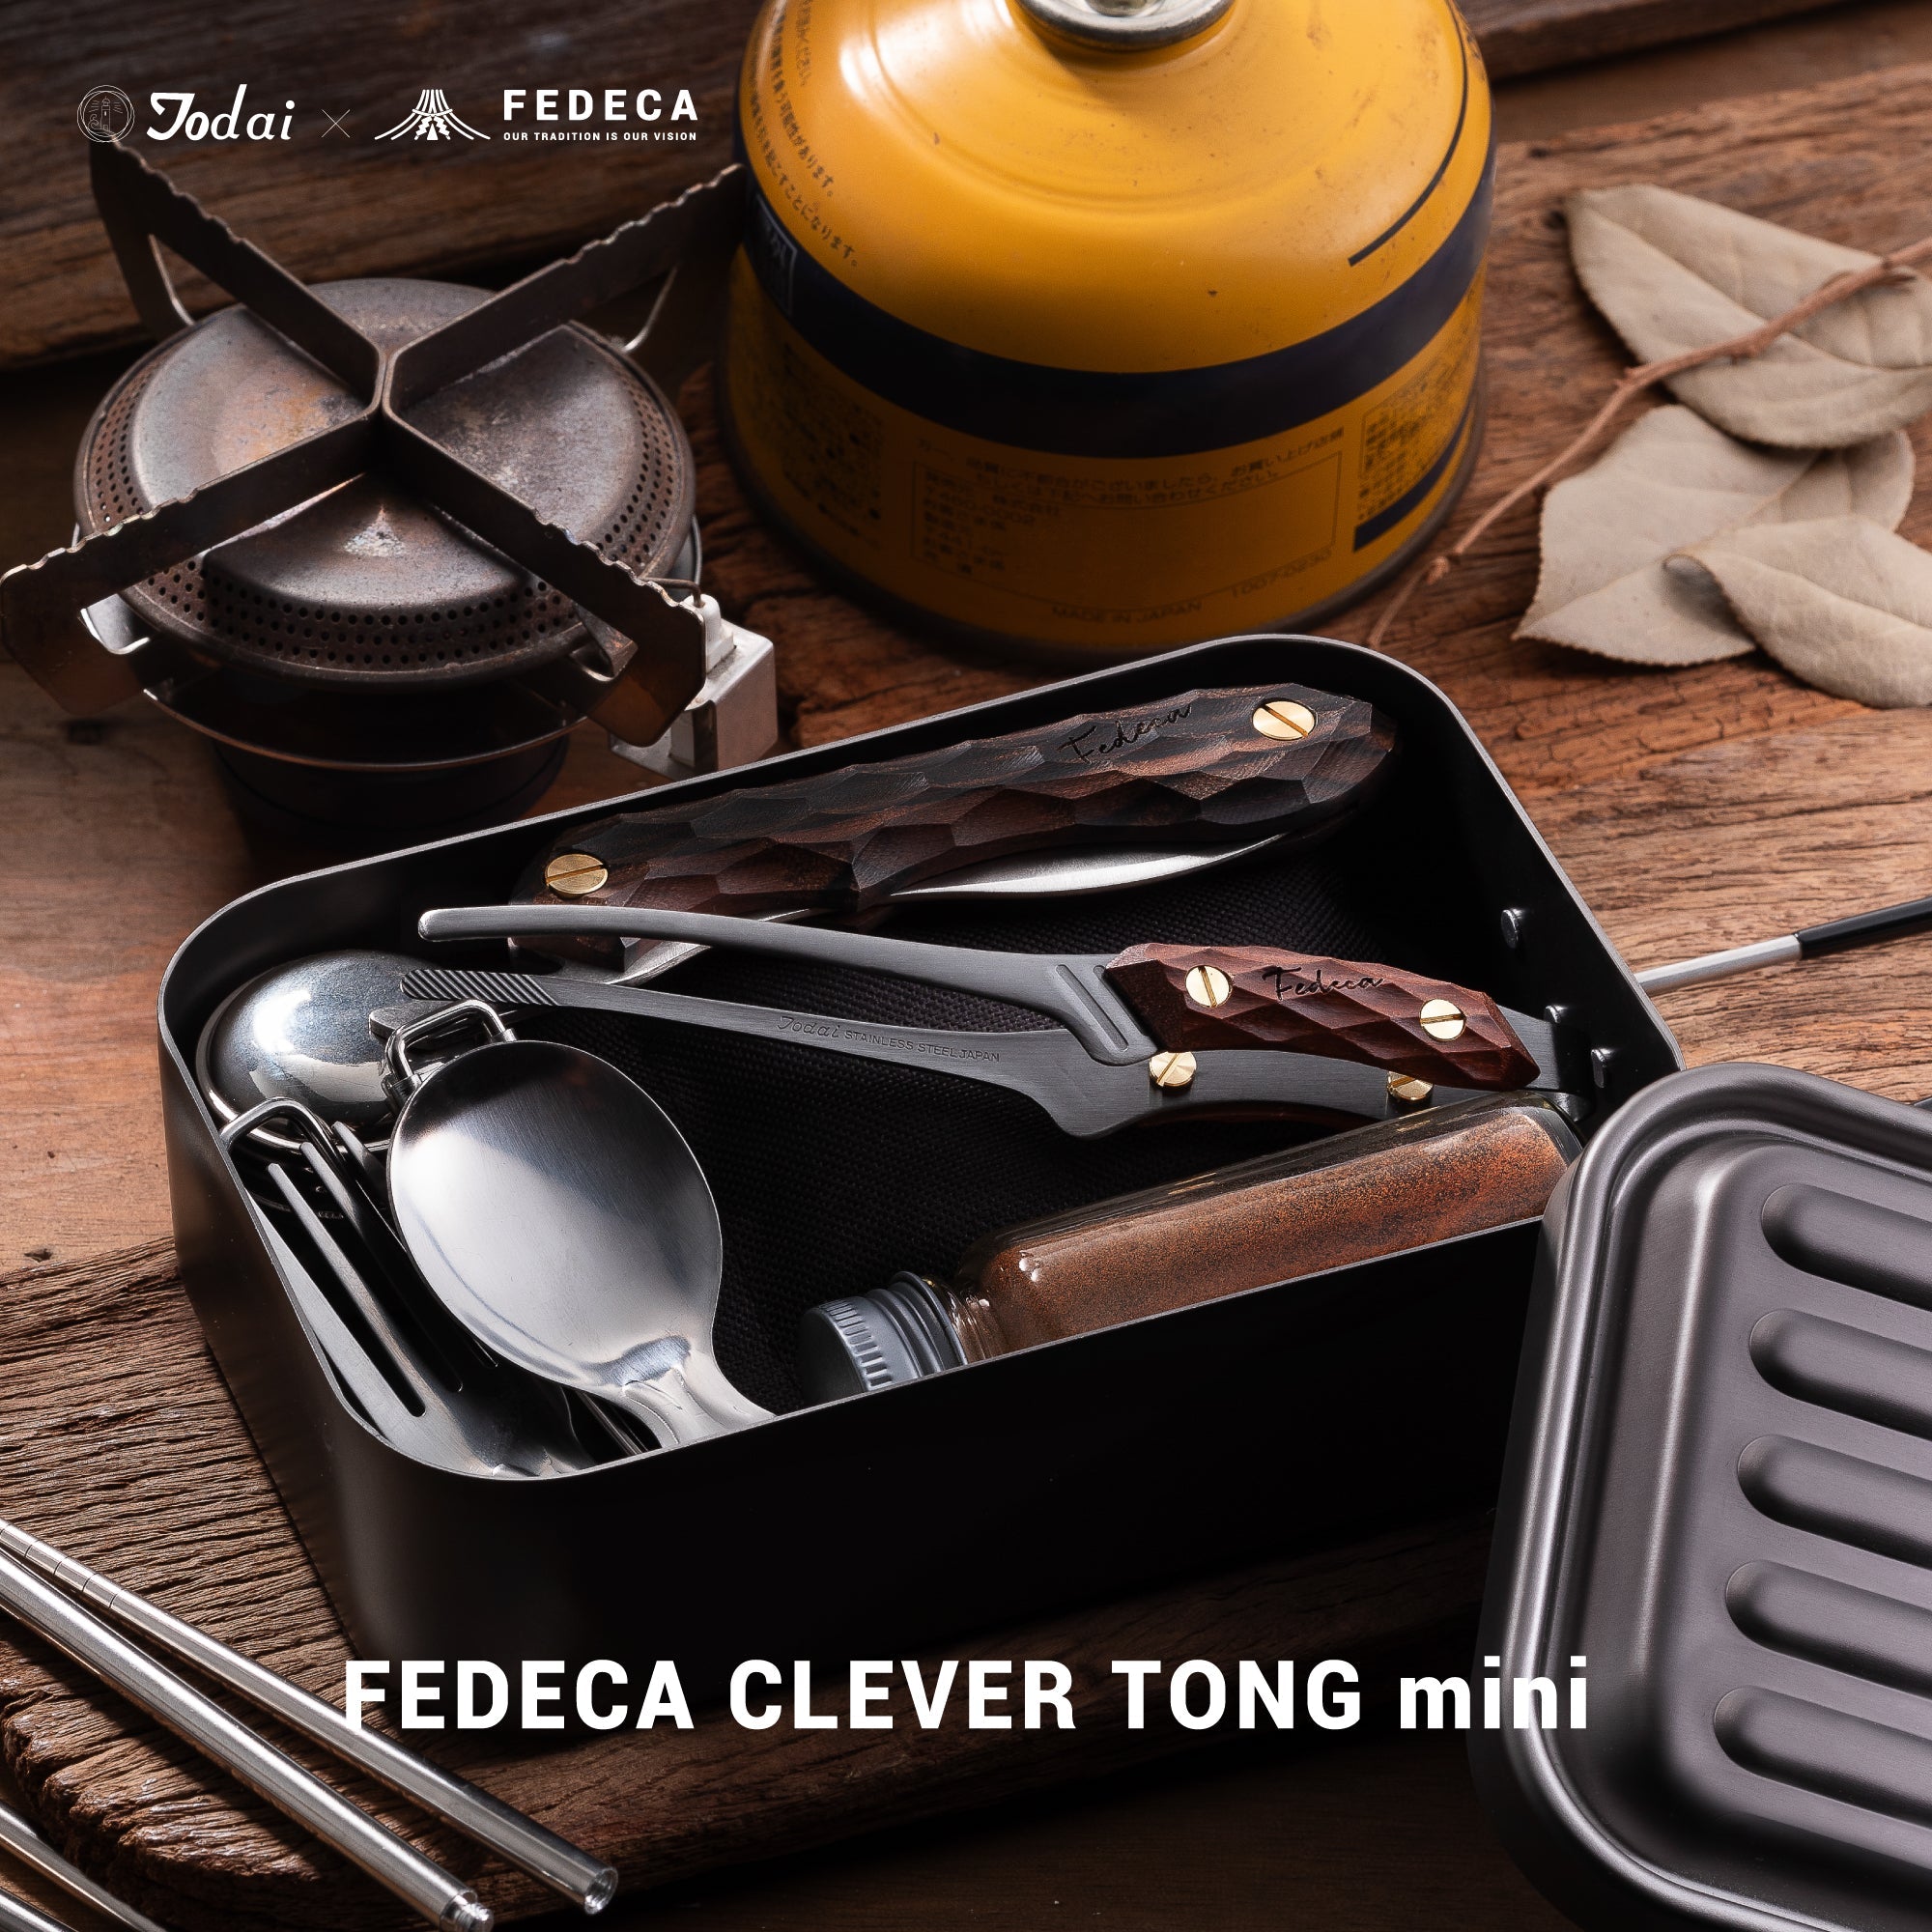 【NEW】FEDECA CLEVER TONG mini プレーンブラック 4,620円